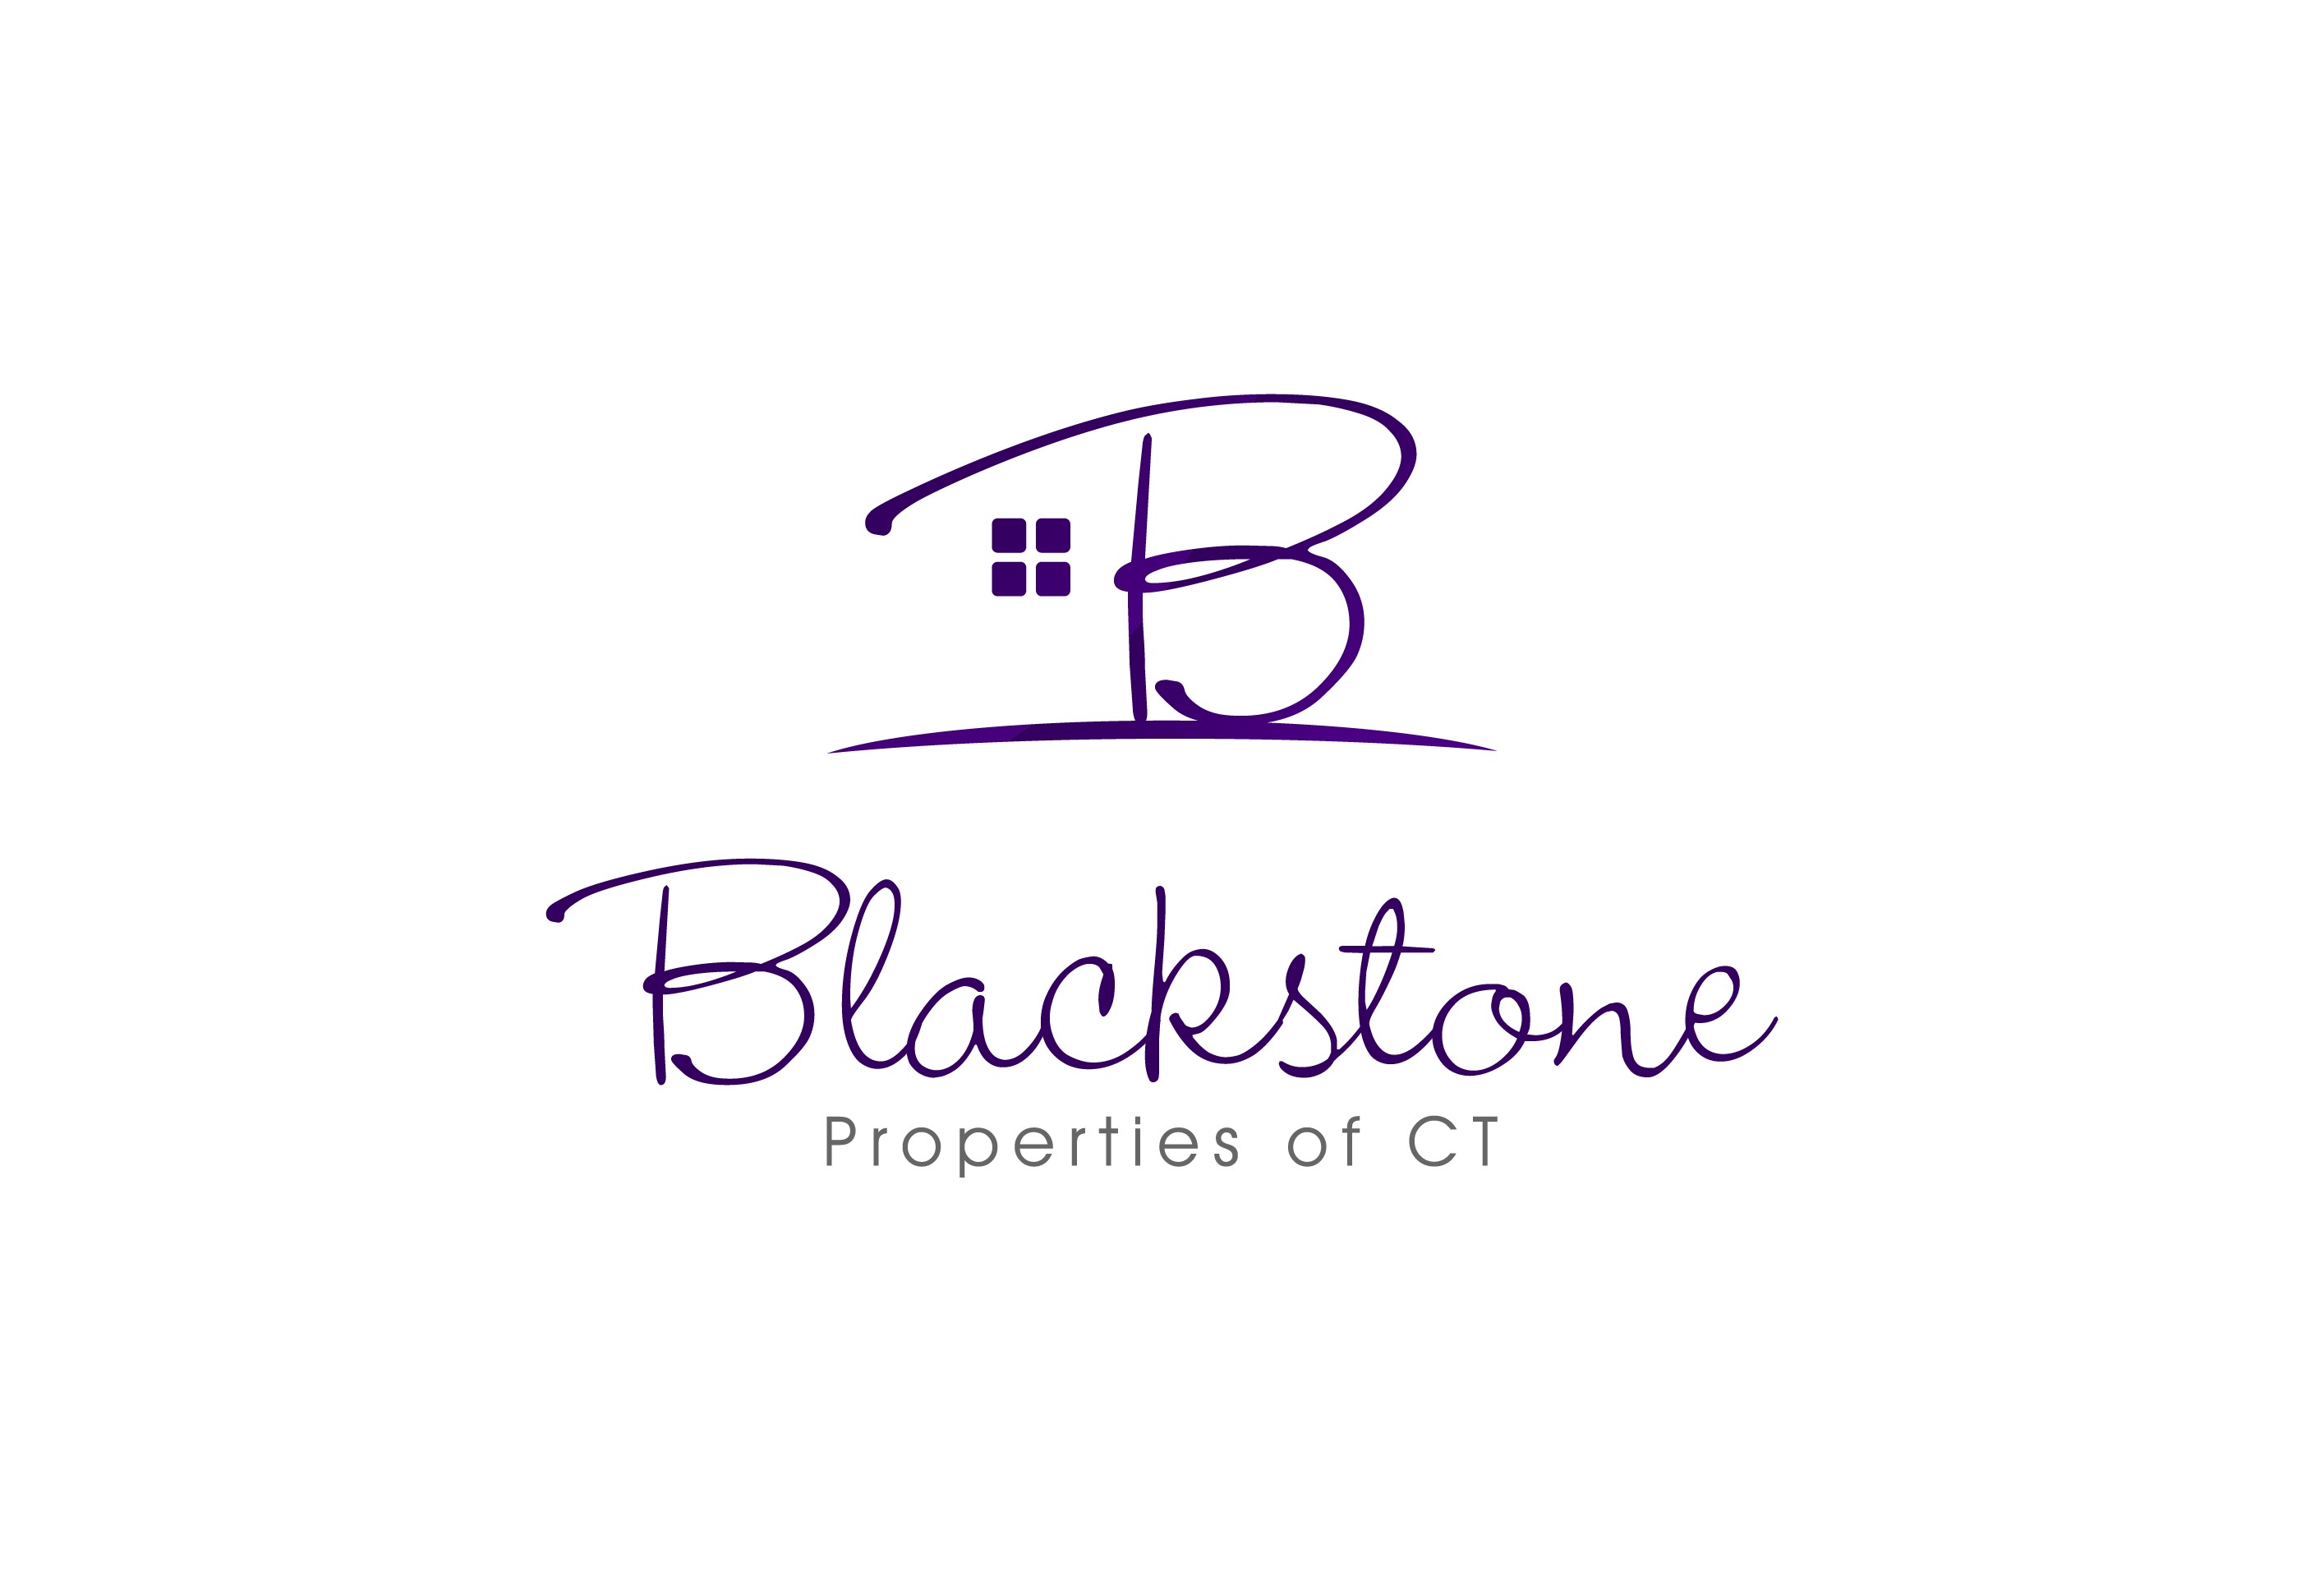 Blackstone Properties of CT | LinkedIn